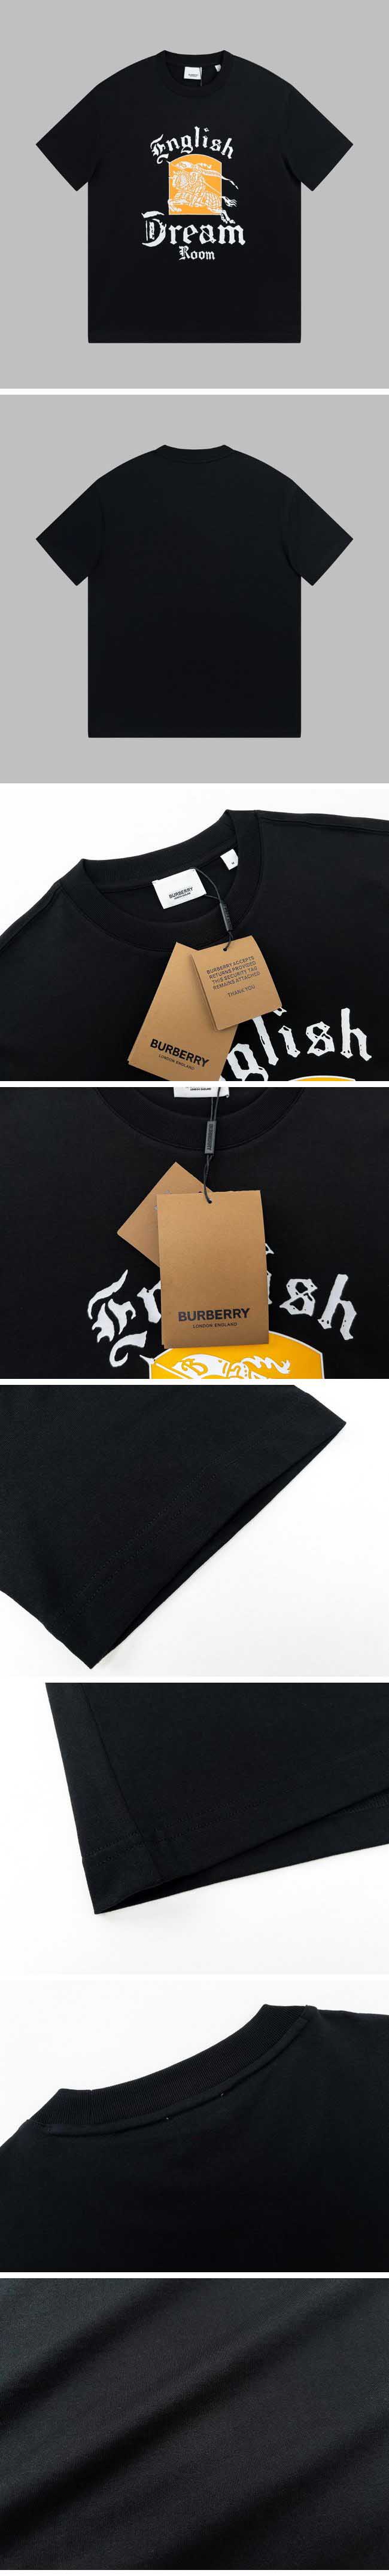 Burberry Slogan Print Black Tee バーバリー スローガン プリント ブラック Tシャツ